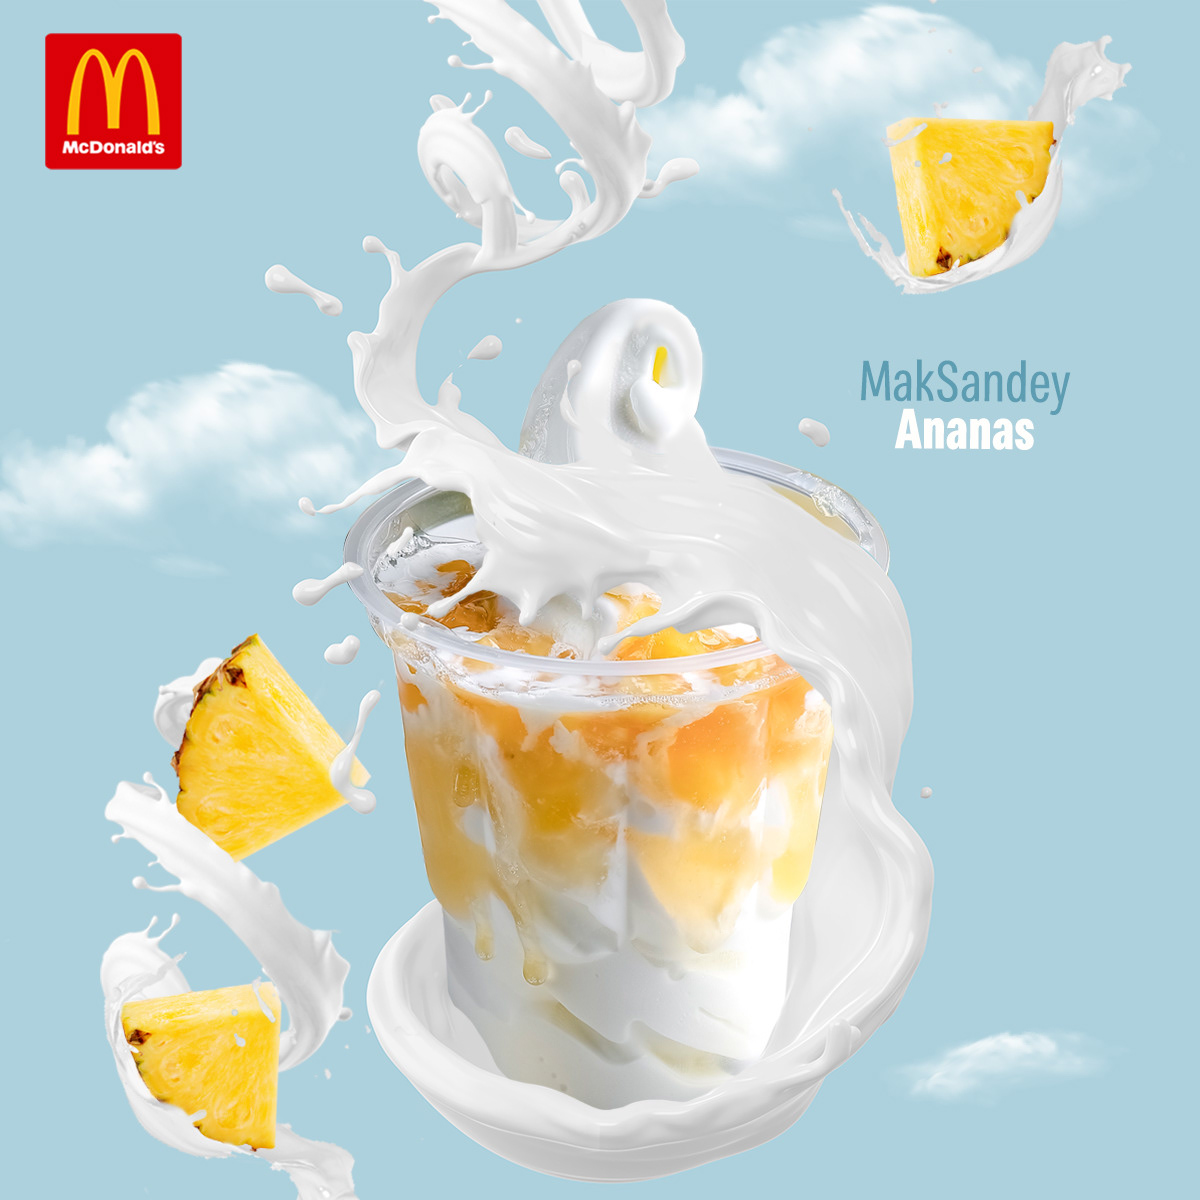 mcdonalds summer poster Sunday Poster McDonalds mcd McDonalds poster poster summer mood McDonalds